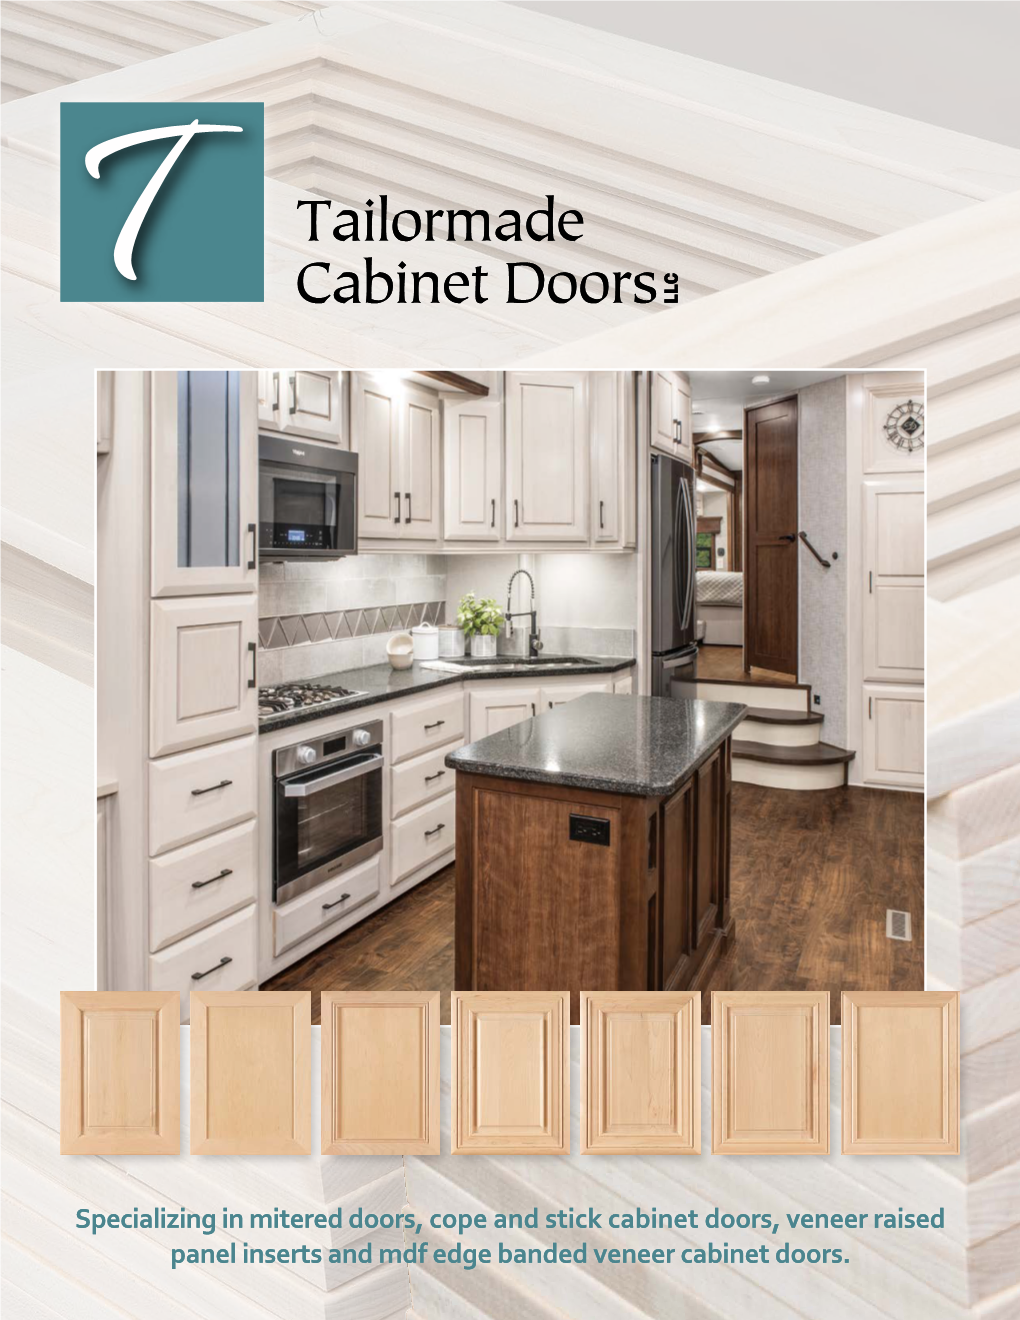 Specializing in Mitered Doors, Cope and Stick Cabinet Doors, Veneer Raised Panel Inserts and Mdf Edge Banded Veneer Cabinet Doors